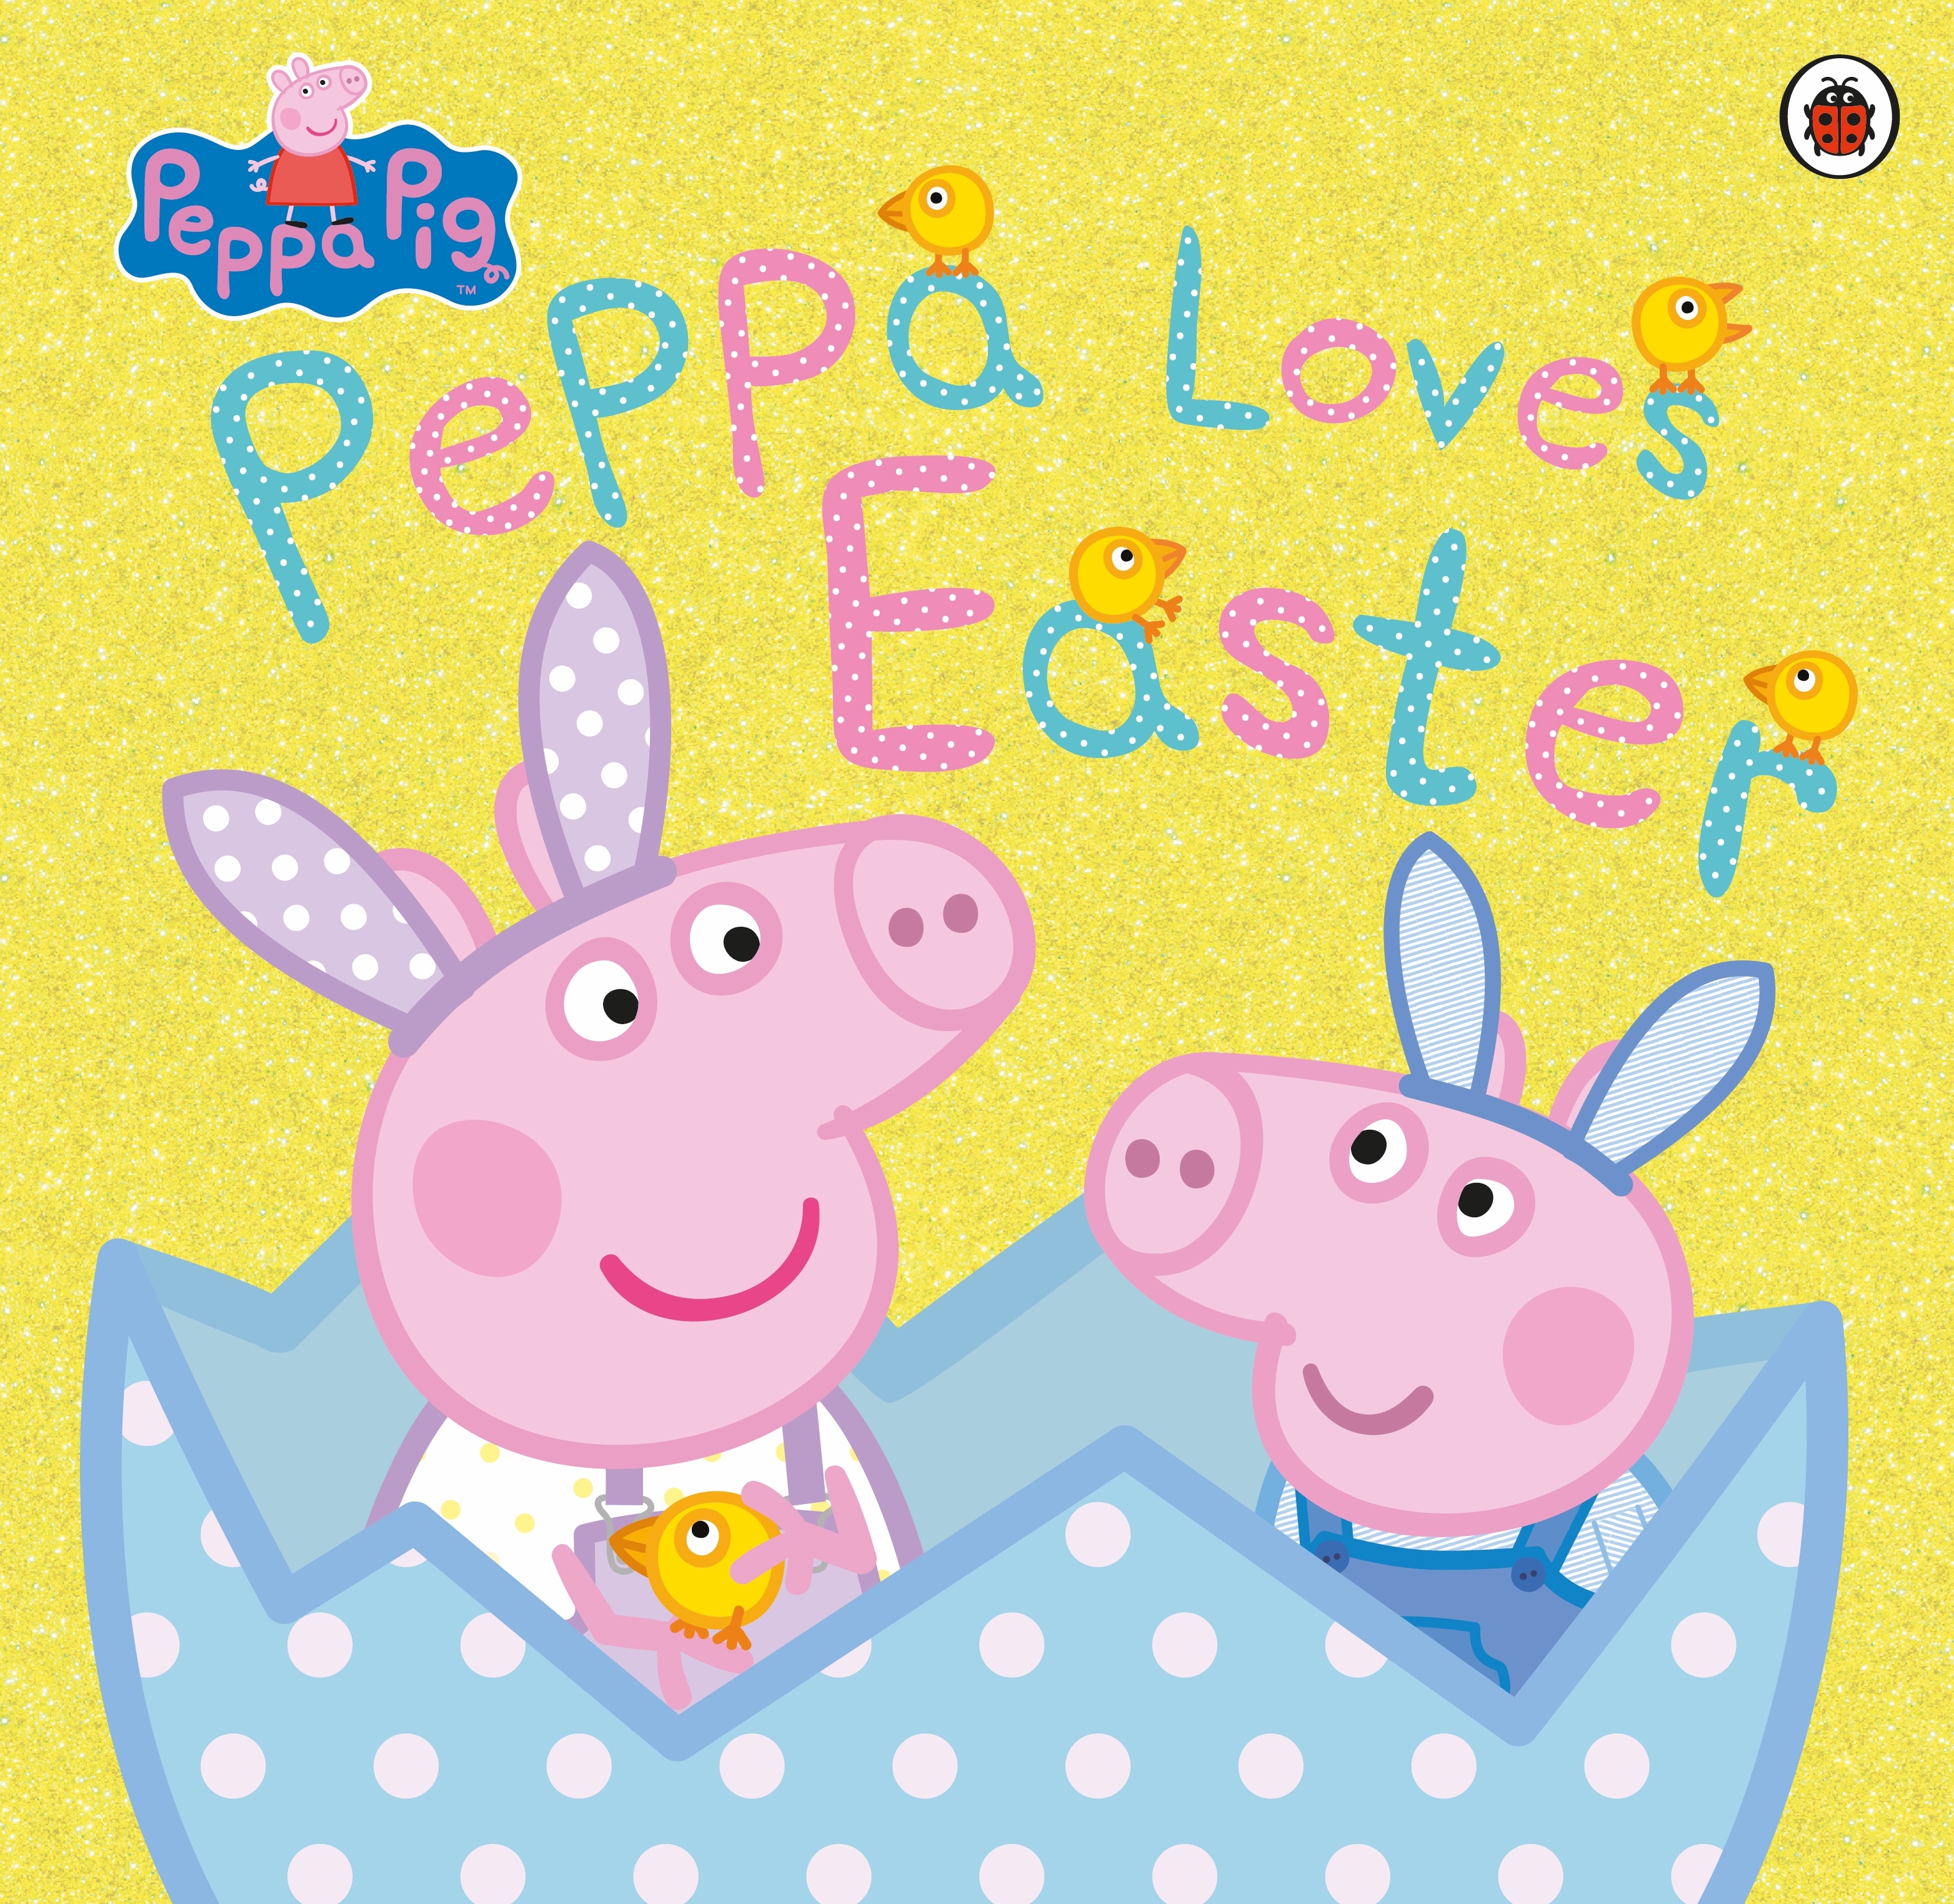 Book “Peppa Pig: Peppa Loves Easter” by Peppa Pig — February 18, 2021